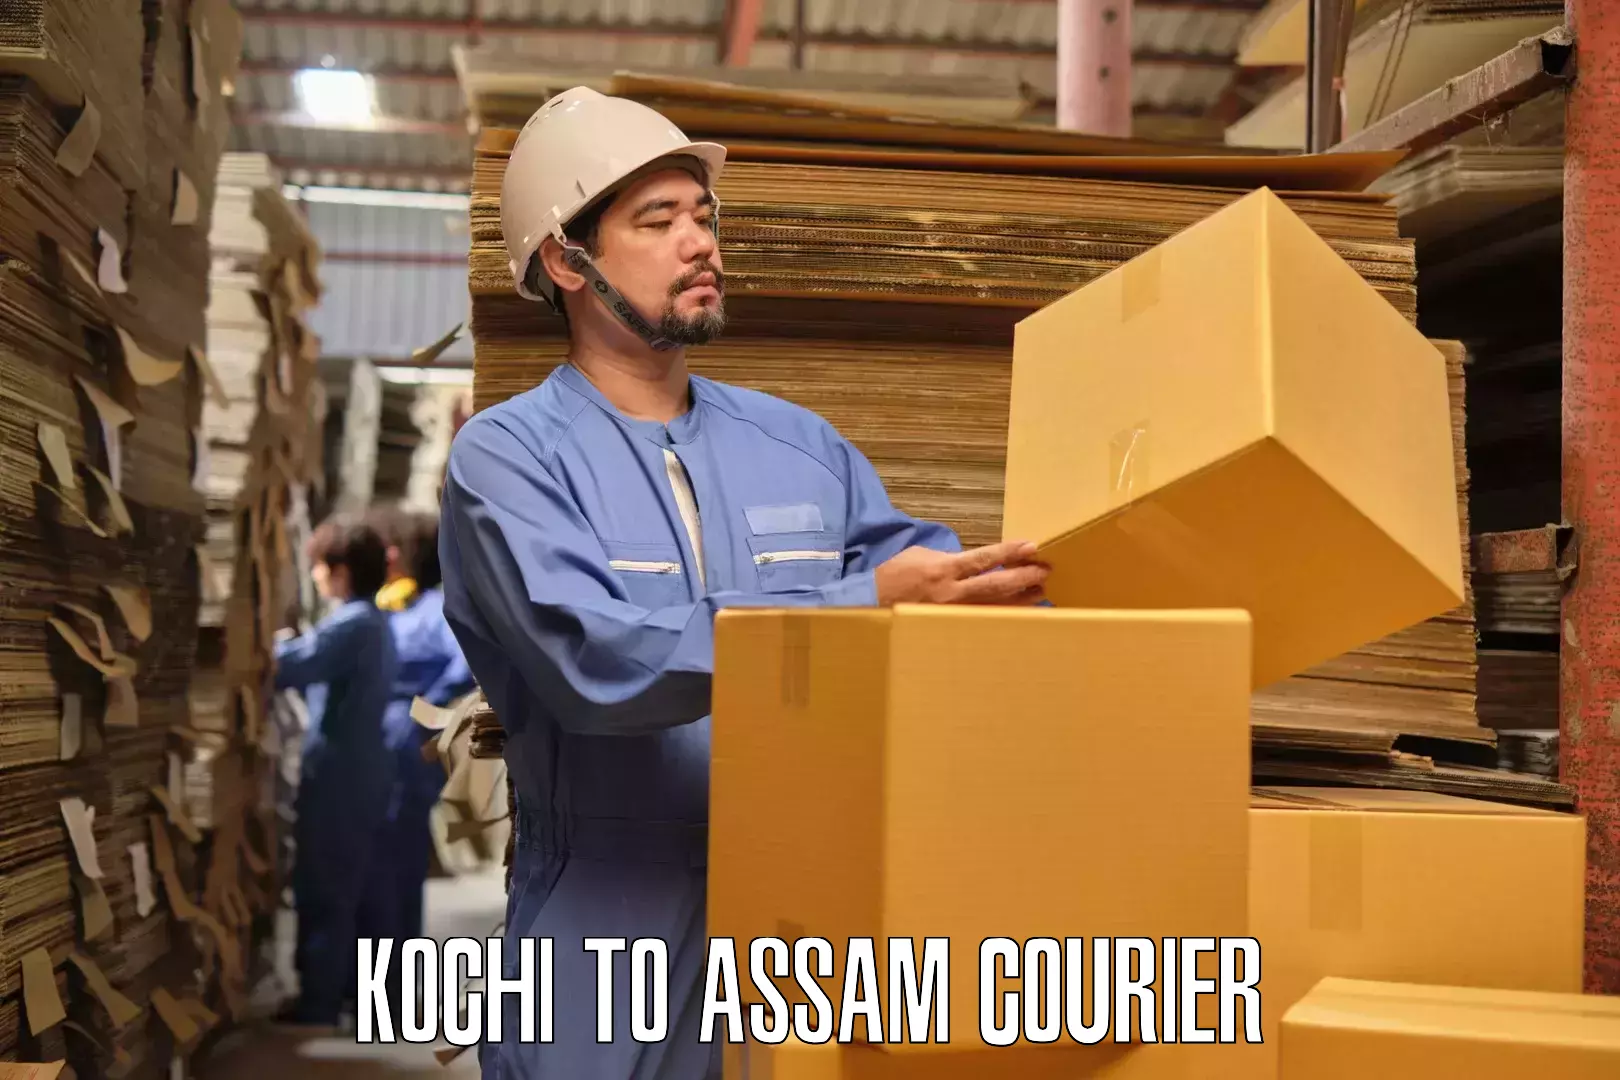 Specialized moving company Kochi to Lala Assam